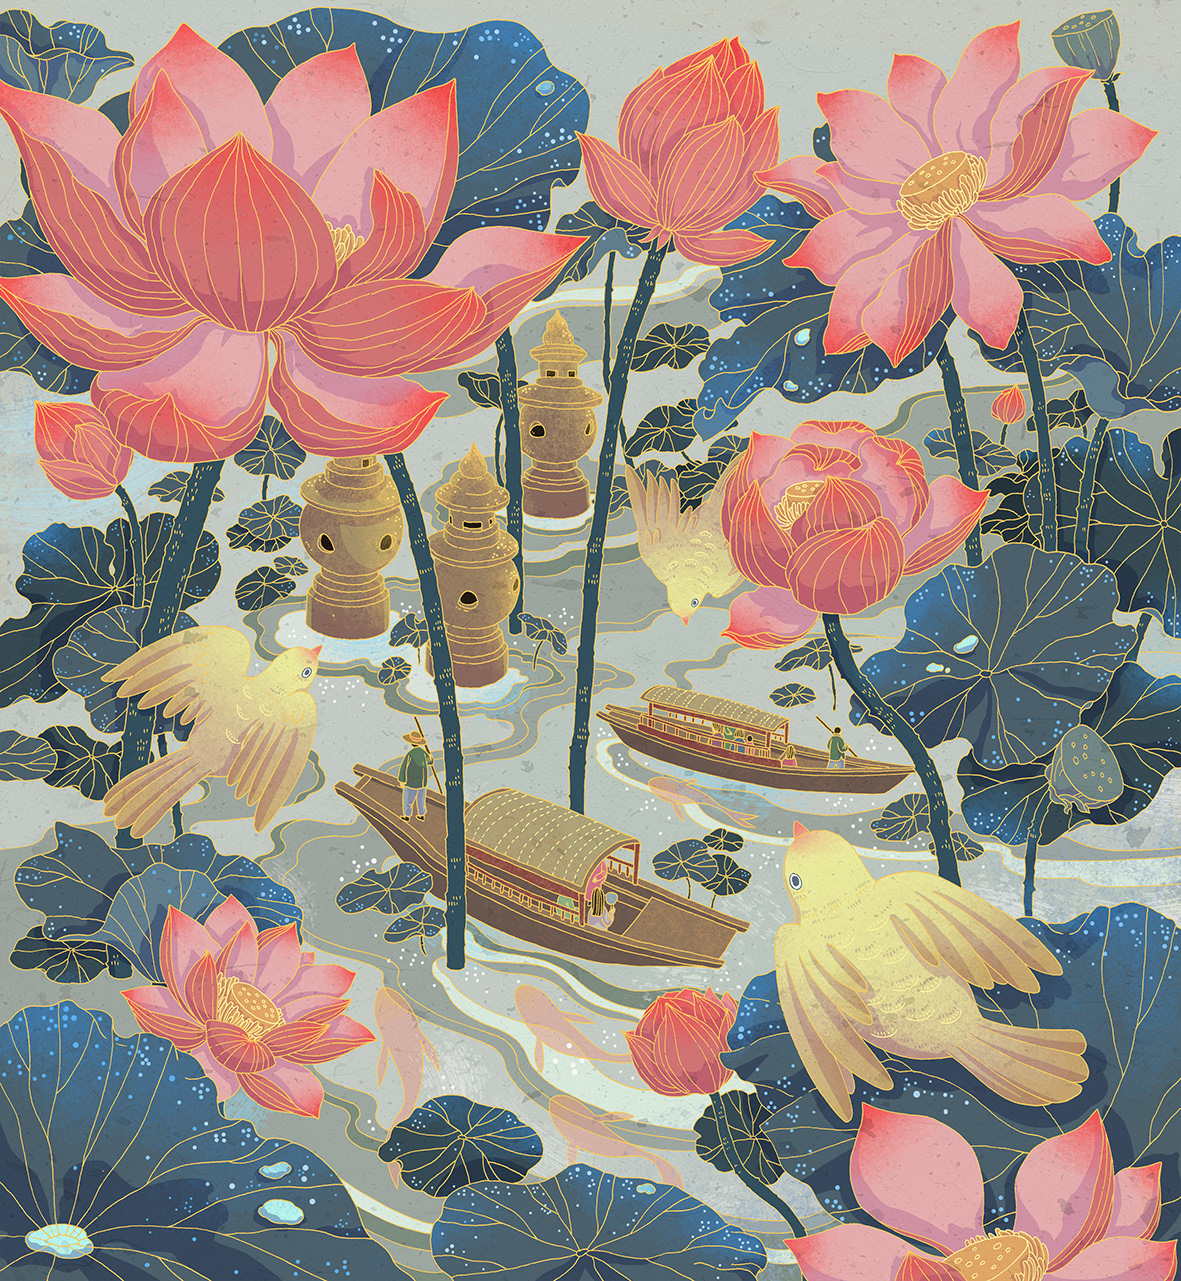 Hangzhou Lotus